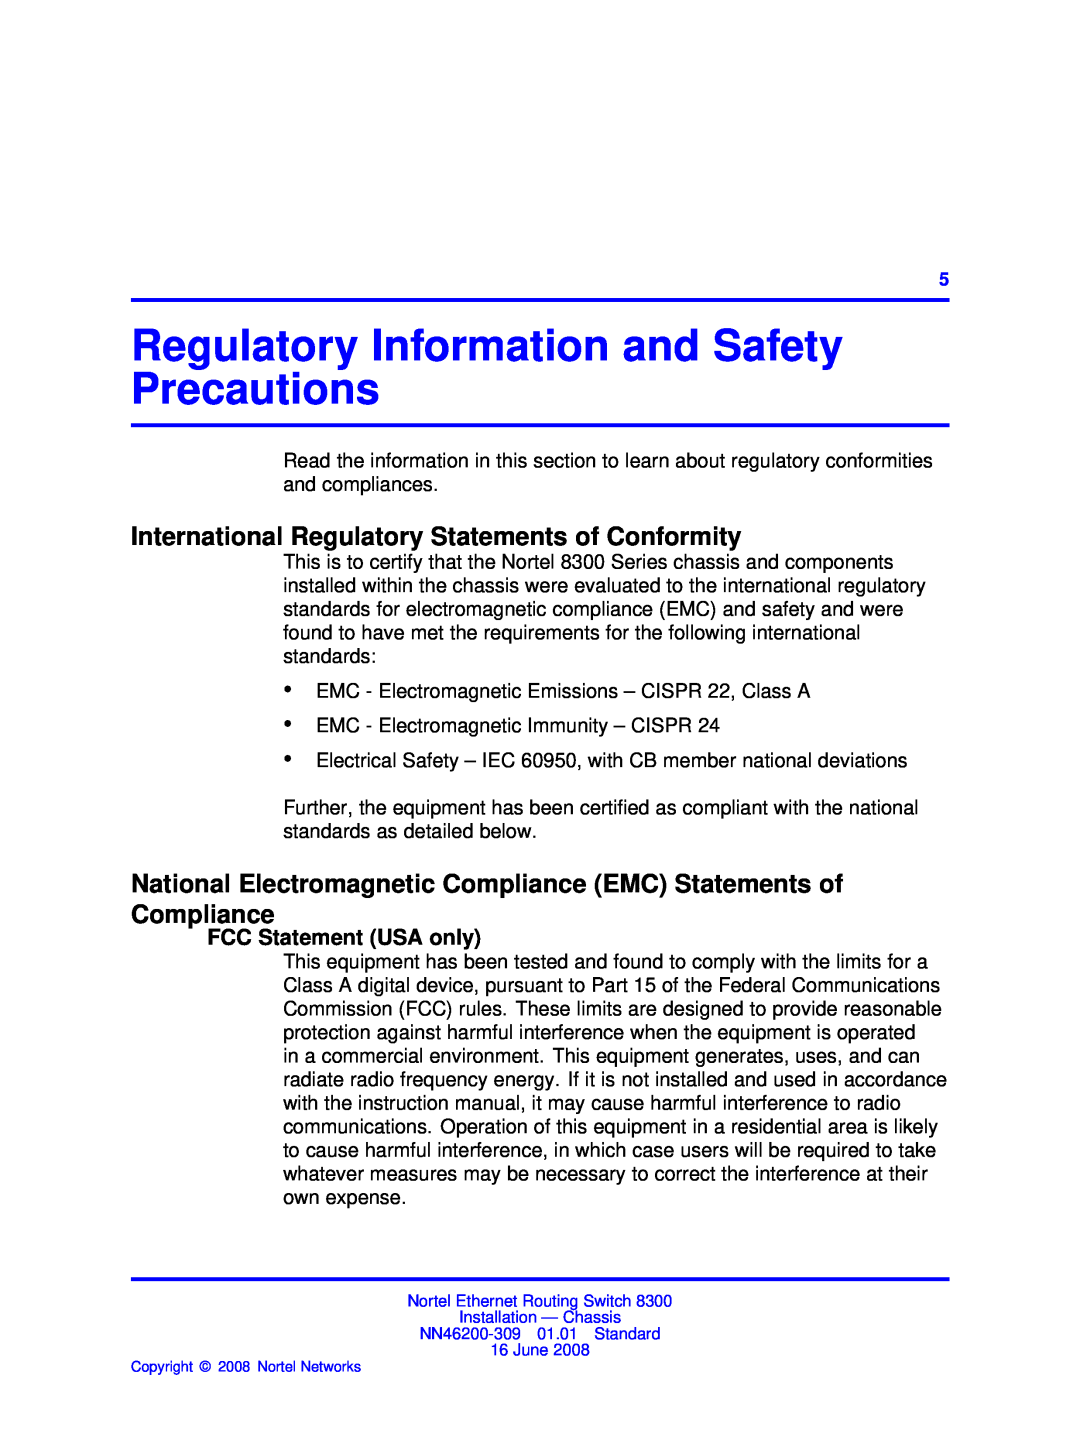 Nortel Networks 8306 Regulatory Information and Safety Precautions, International Regulatory Statements of Conformity 